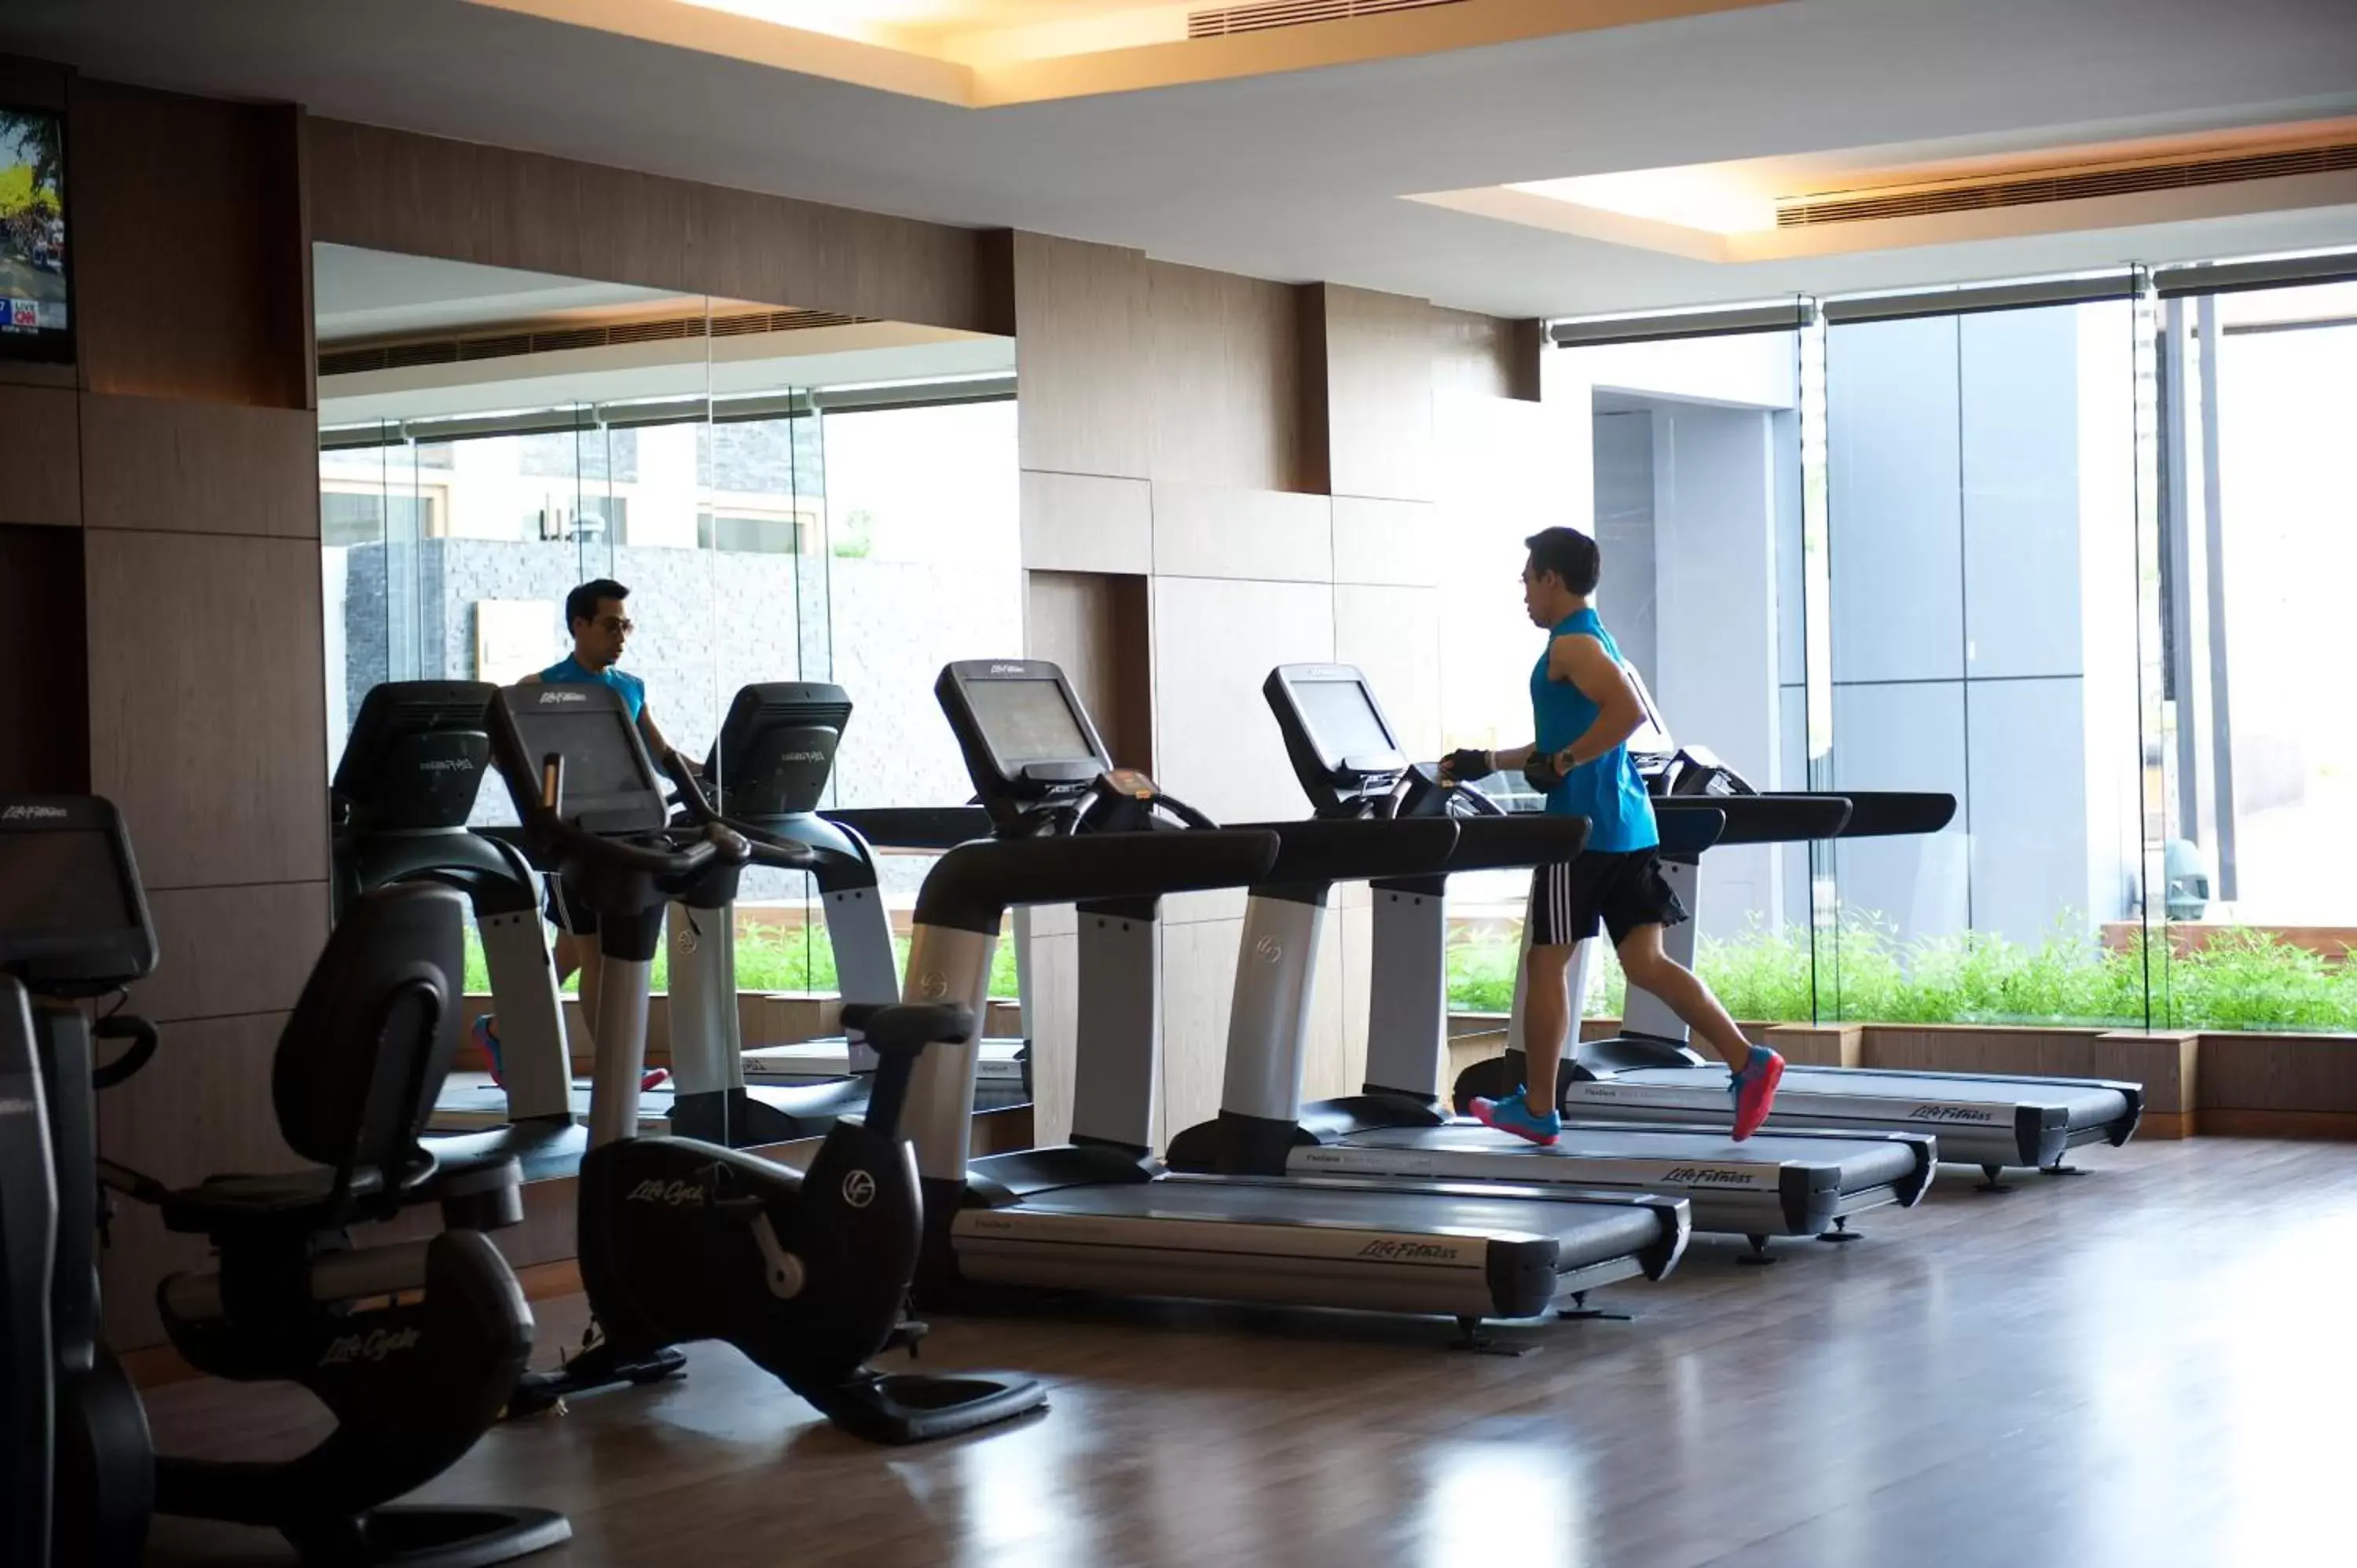 Fitness centre/facilities, Fitness Center/Facilities in Radisson Blu Plaza Bangkok